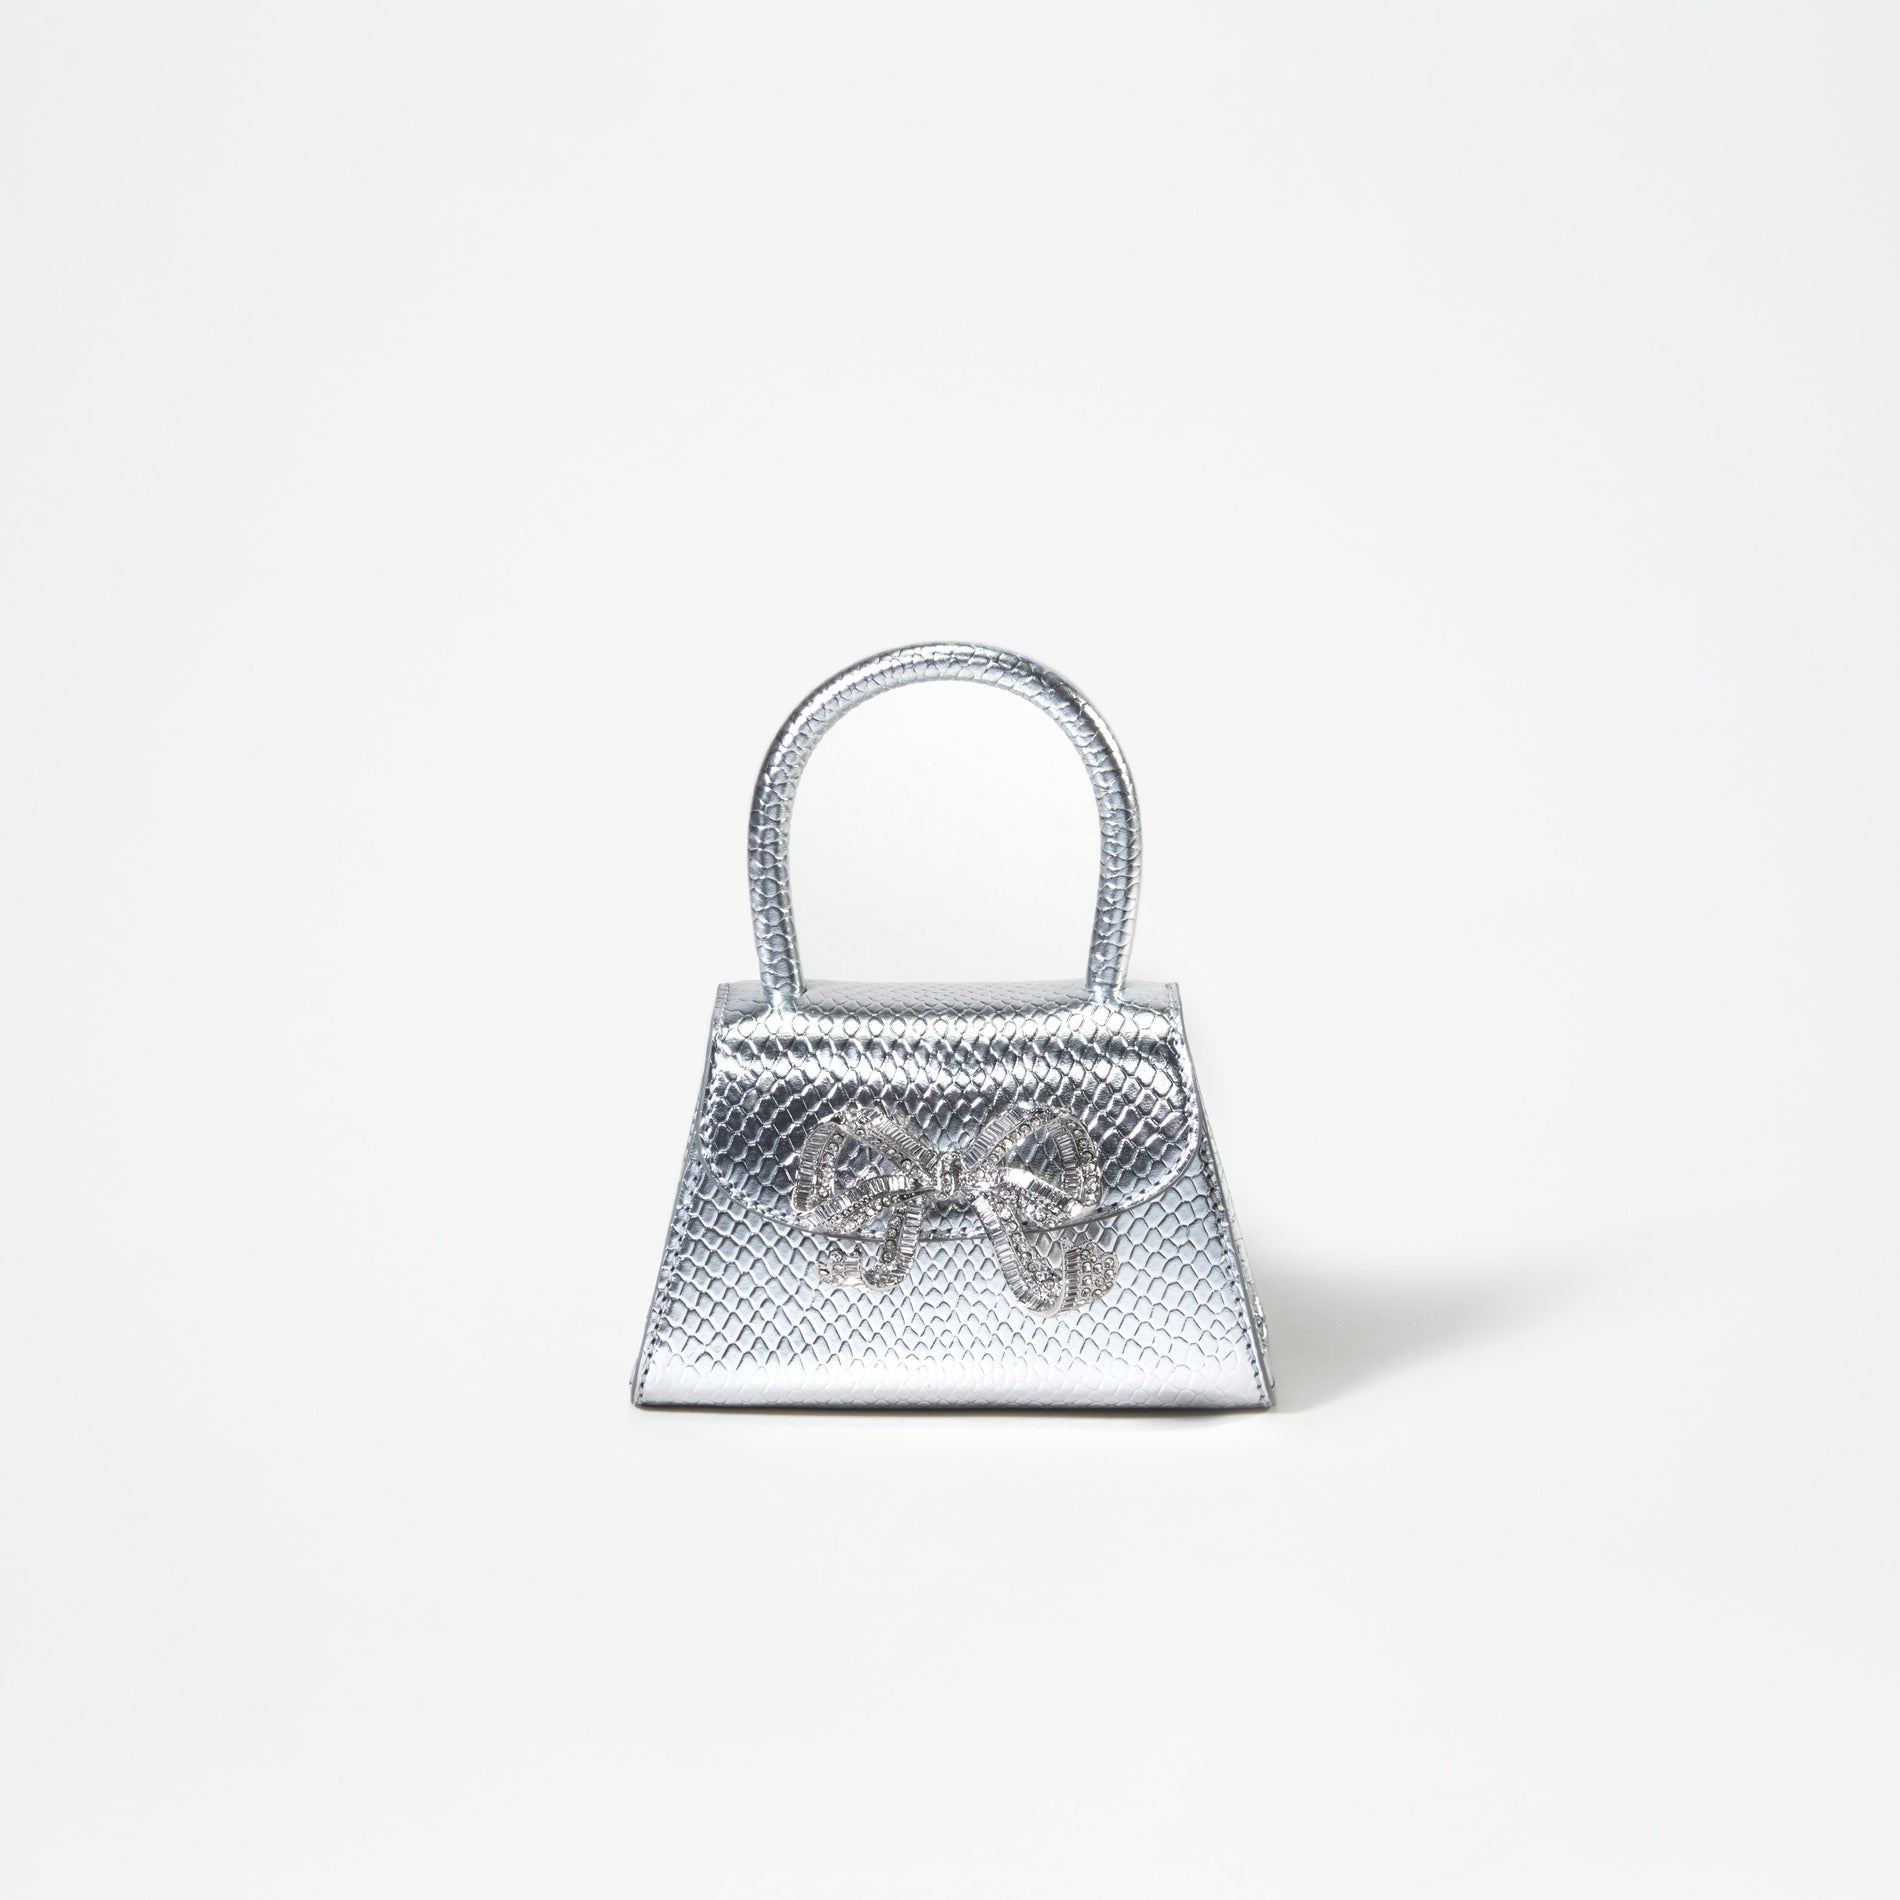 A woman wearing the Silver Python Diamante Bow Micro Bag